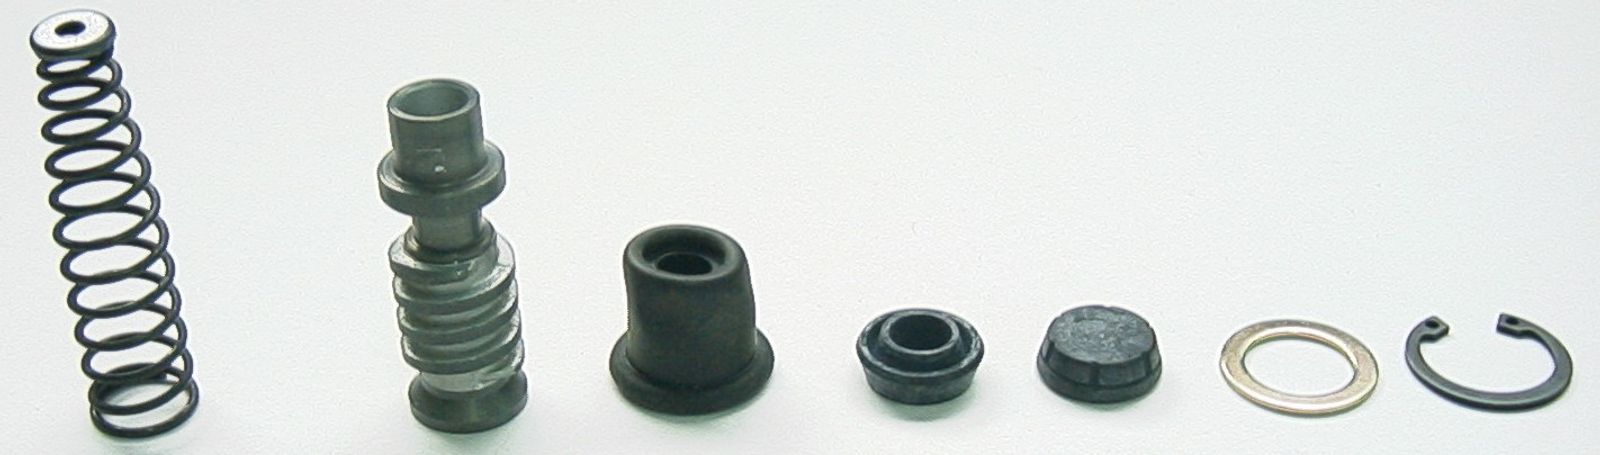 Master Cylinder Repair Kits - 754101T image